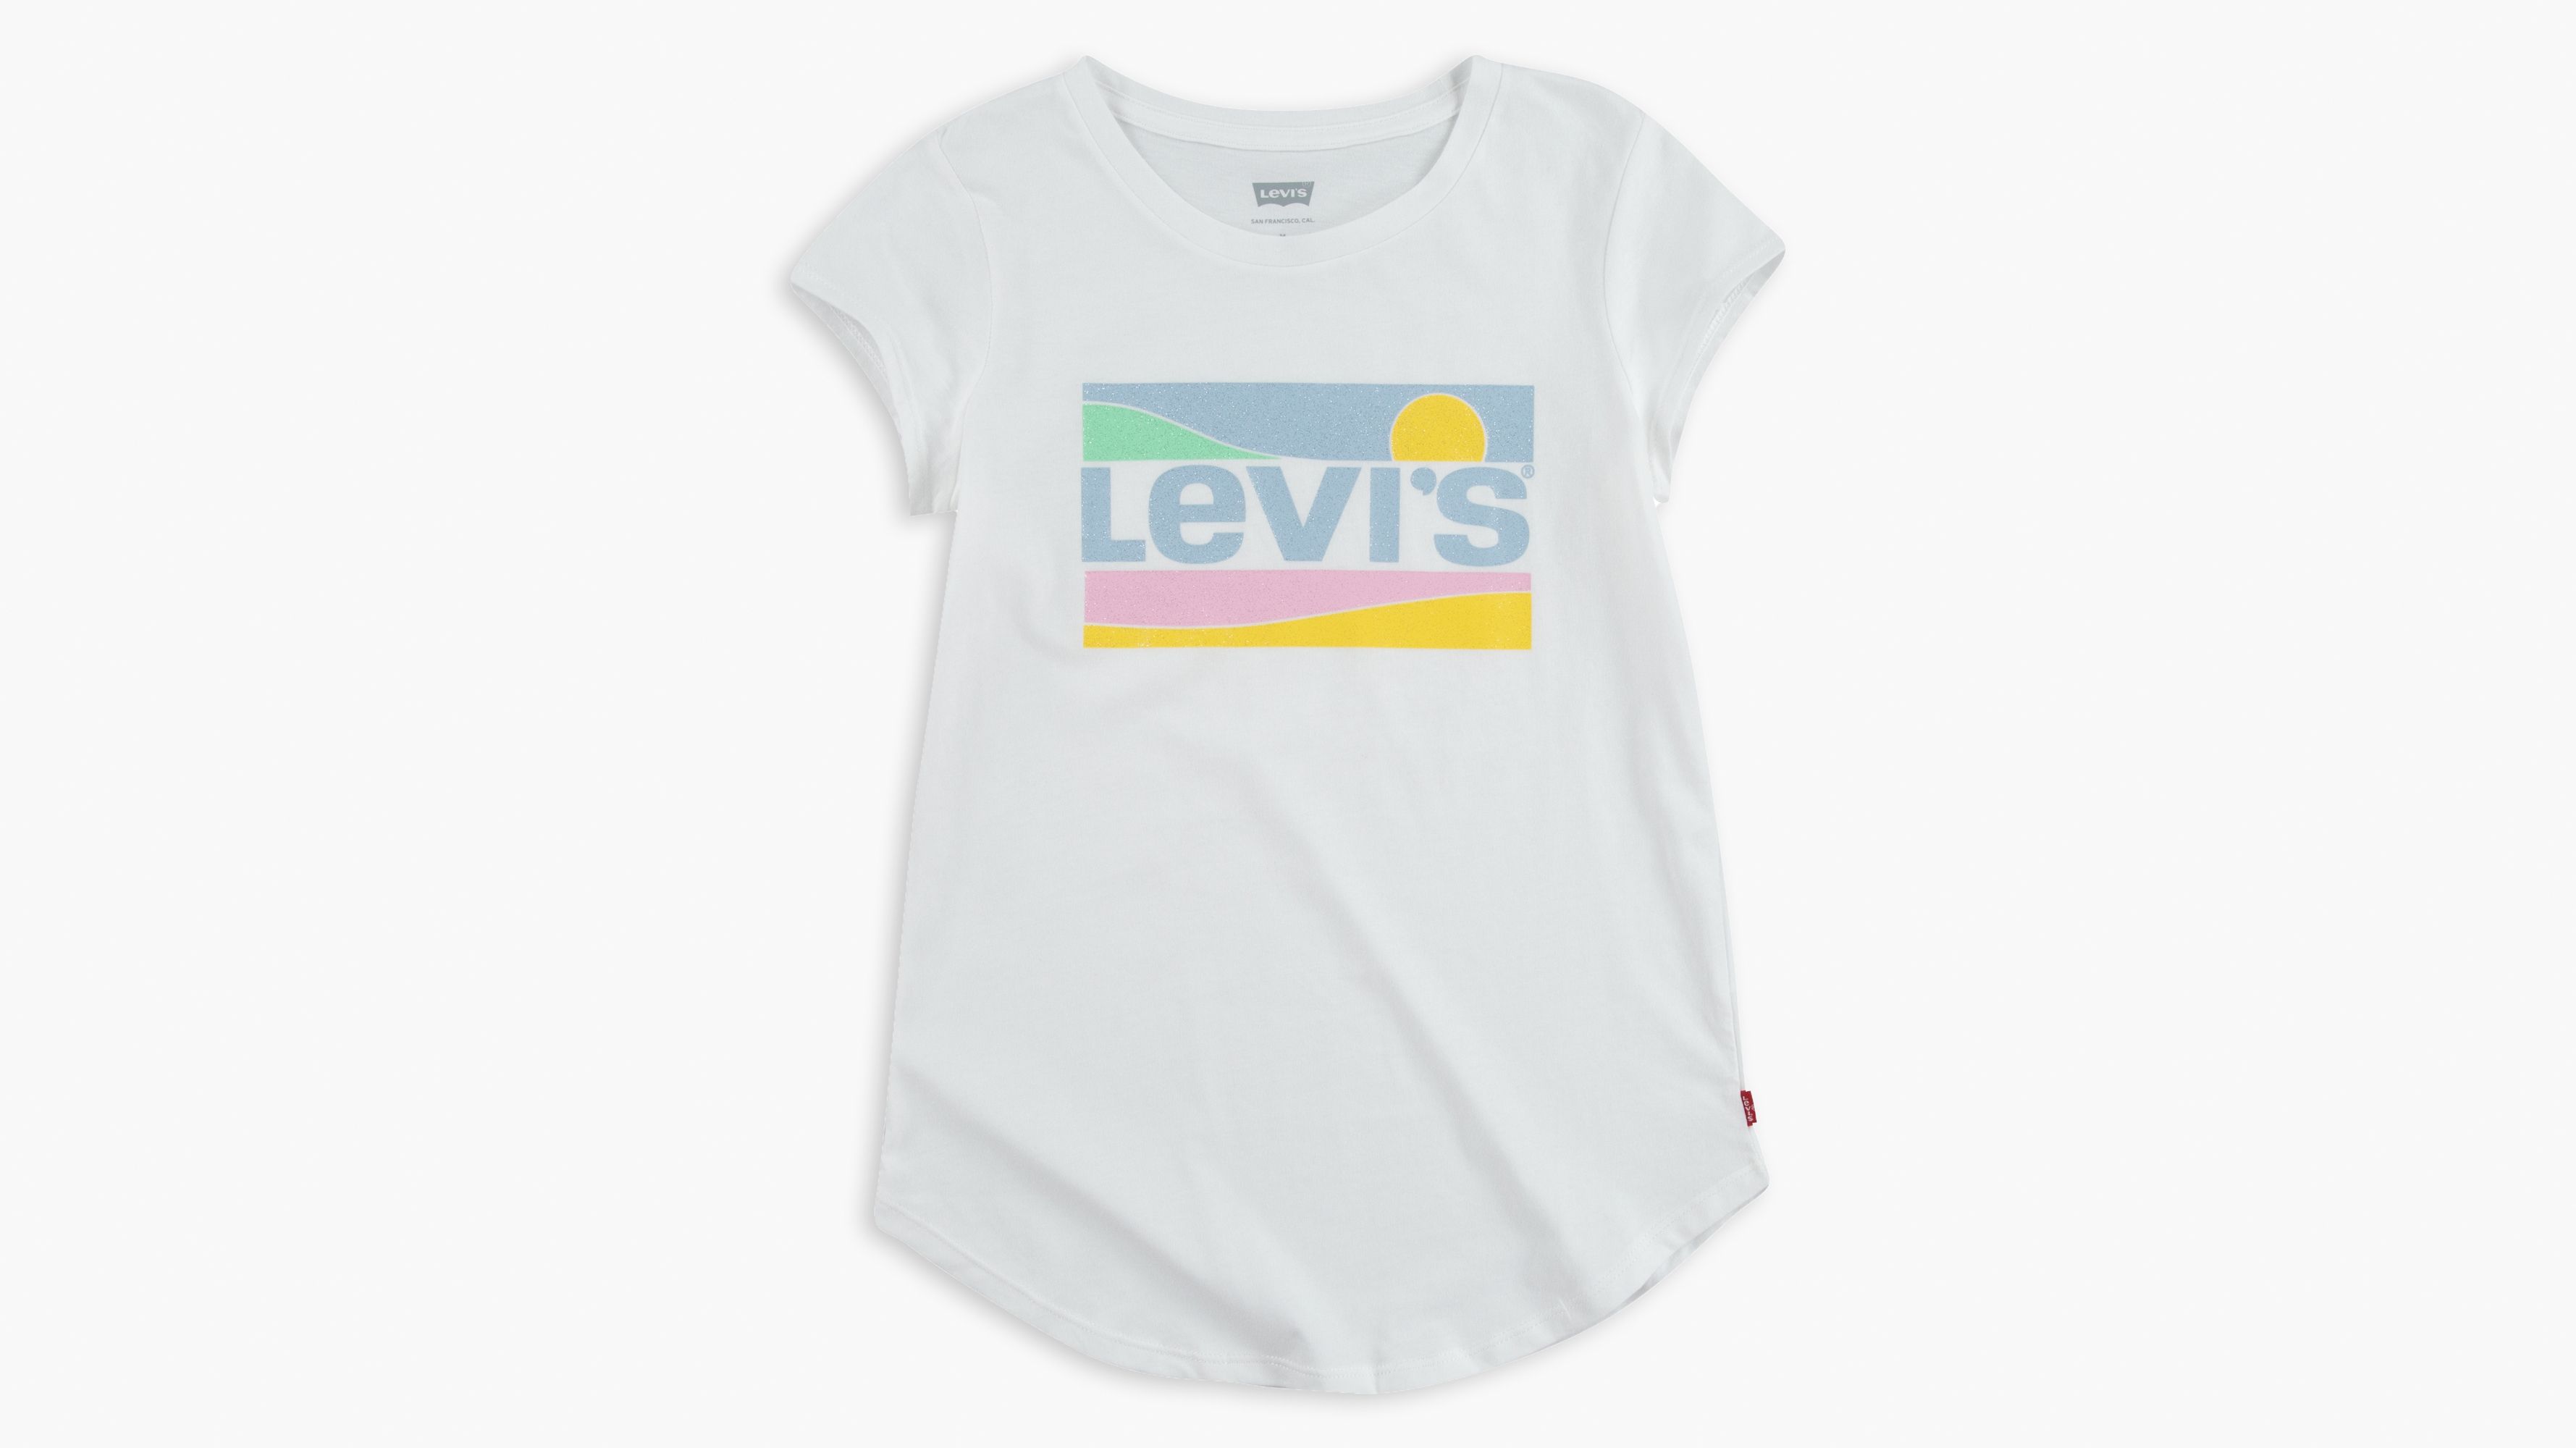 levis tshirt for girls